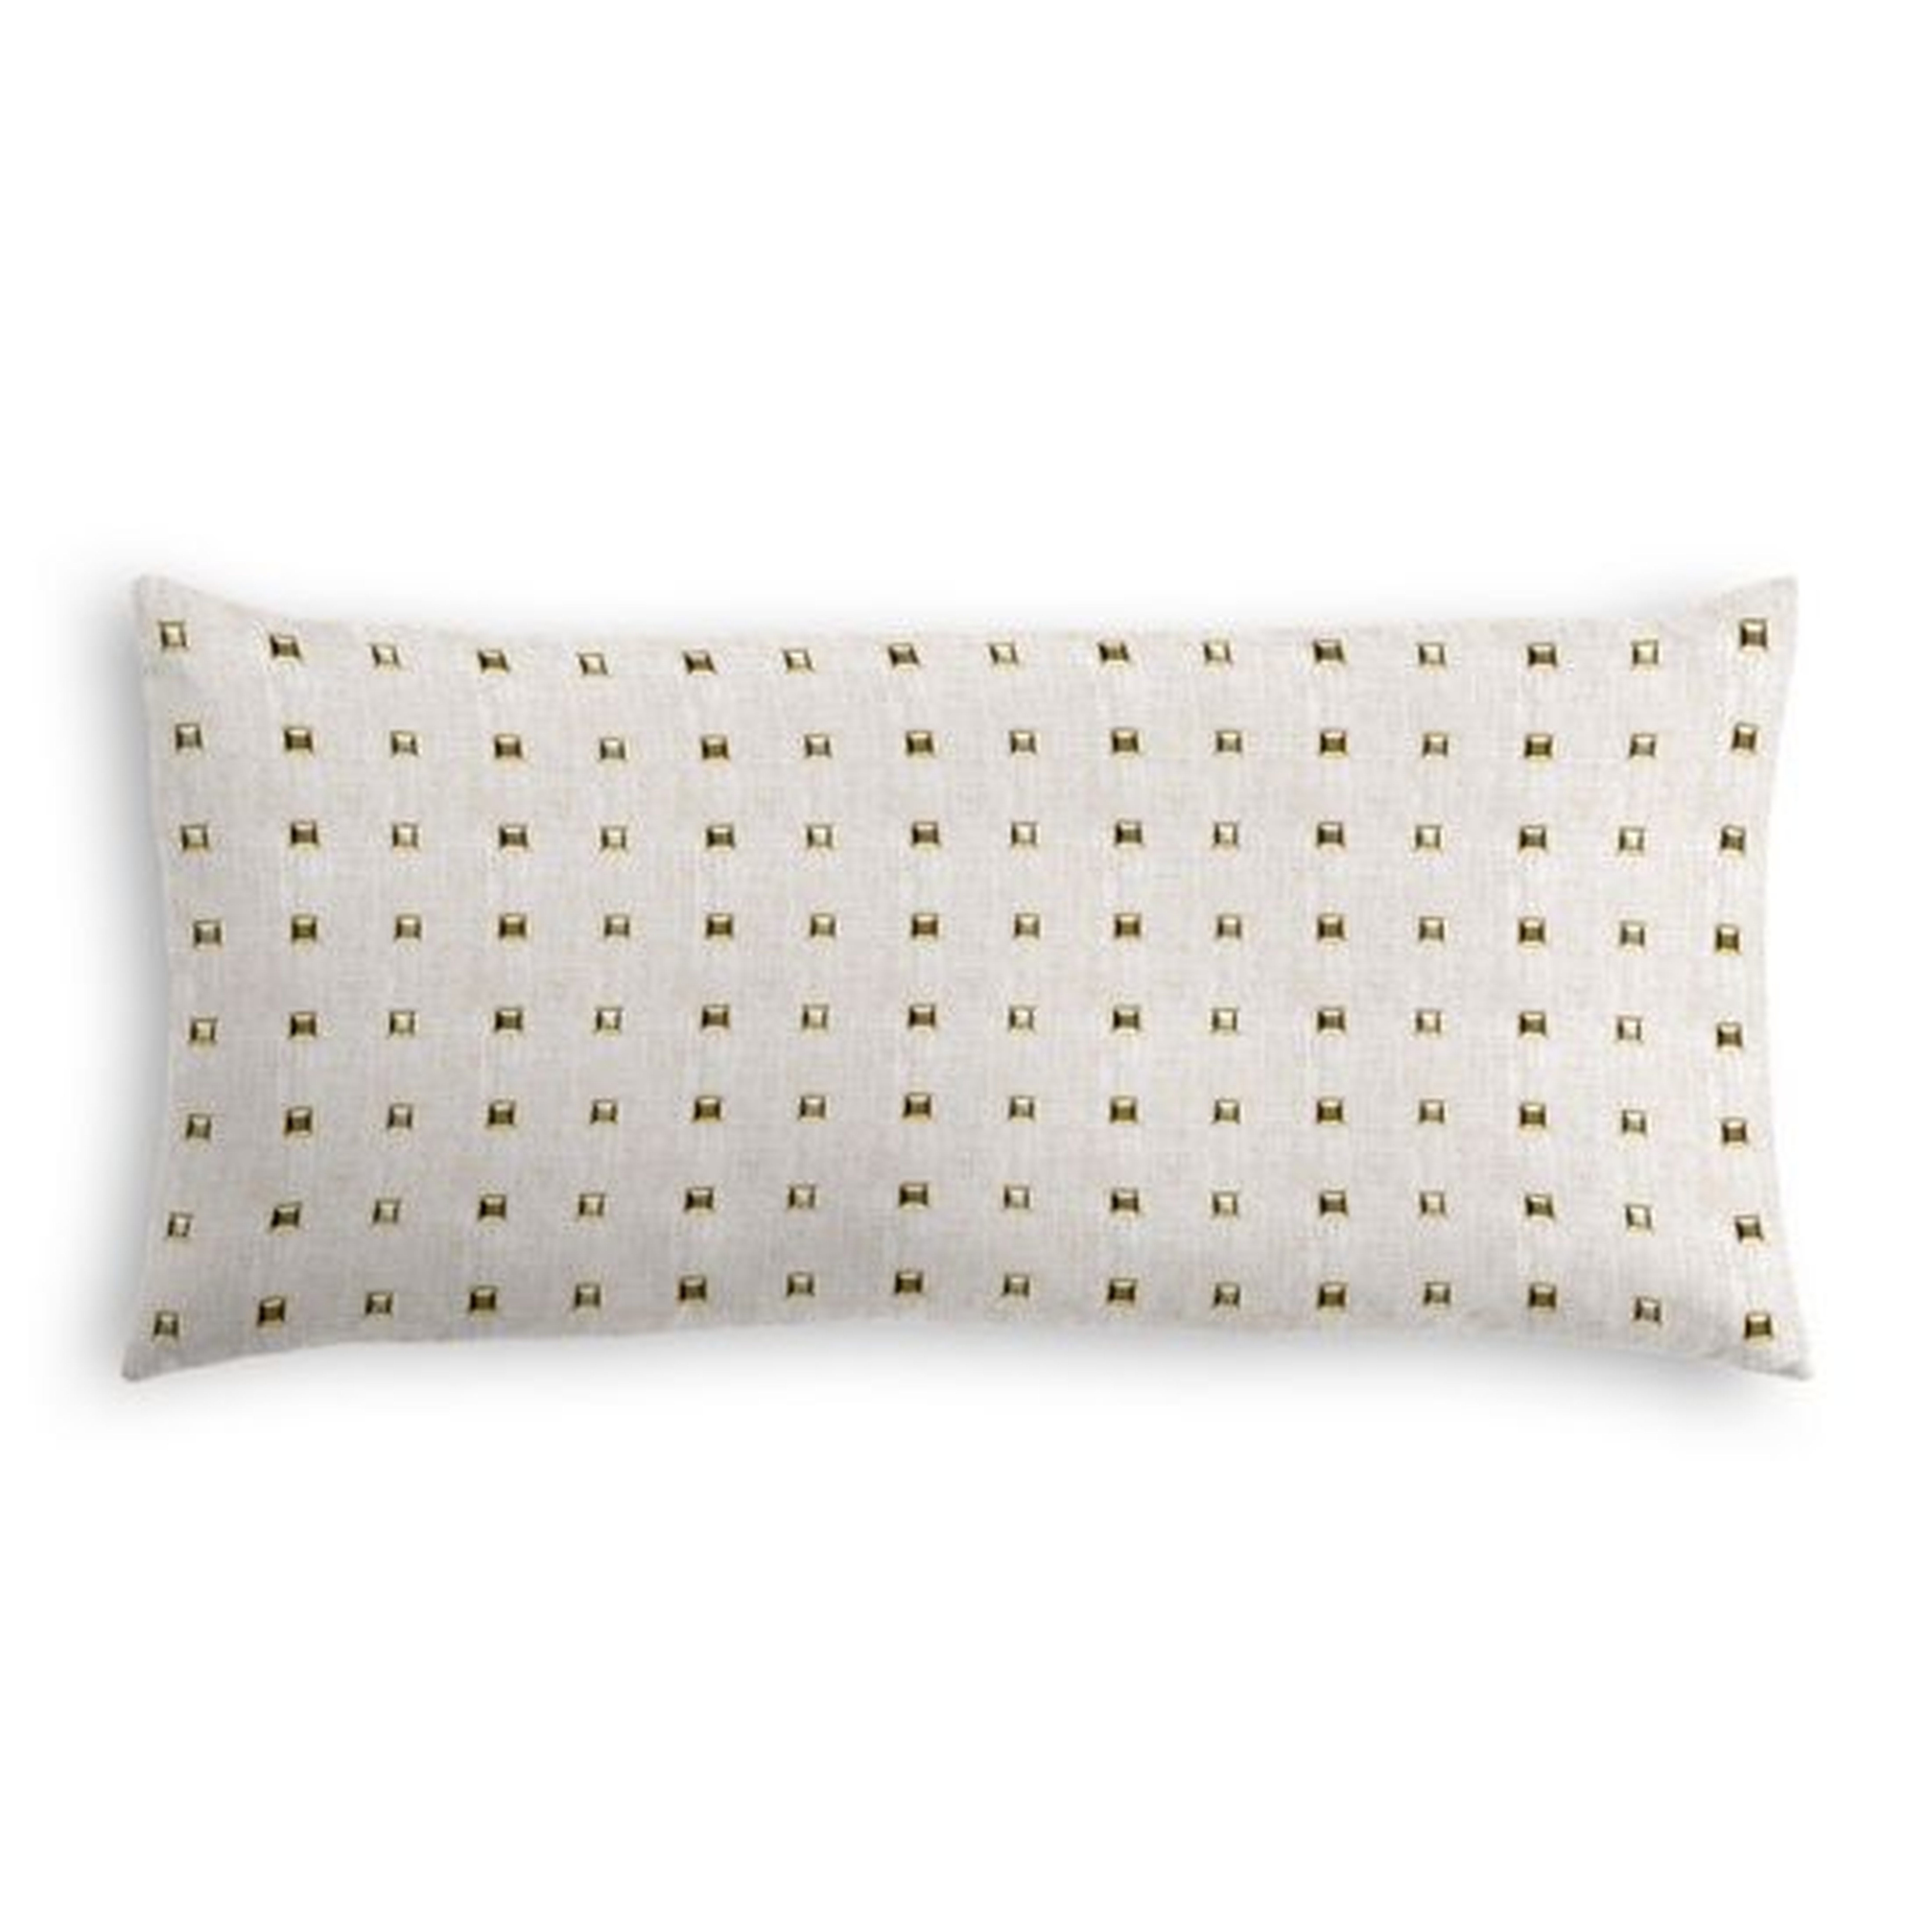 Light Taupe Gold Studded Lumbar Pillow - Stud Muffin - Oatmeal - 12" x 24" - Down insert - Loom Decor